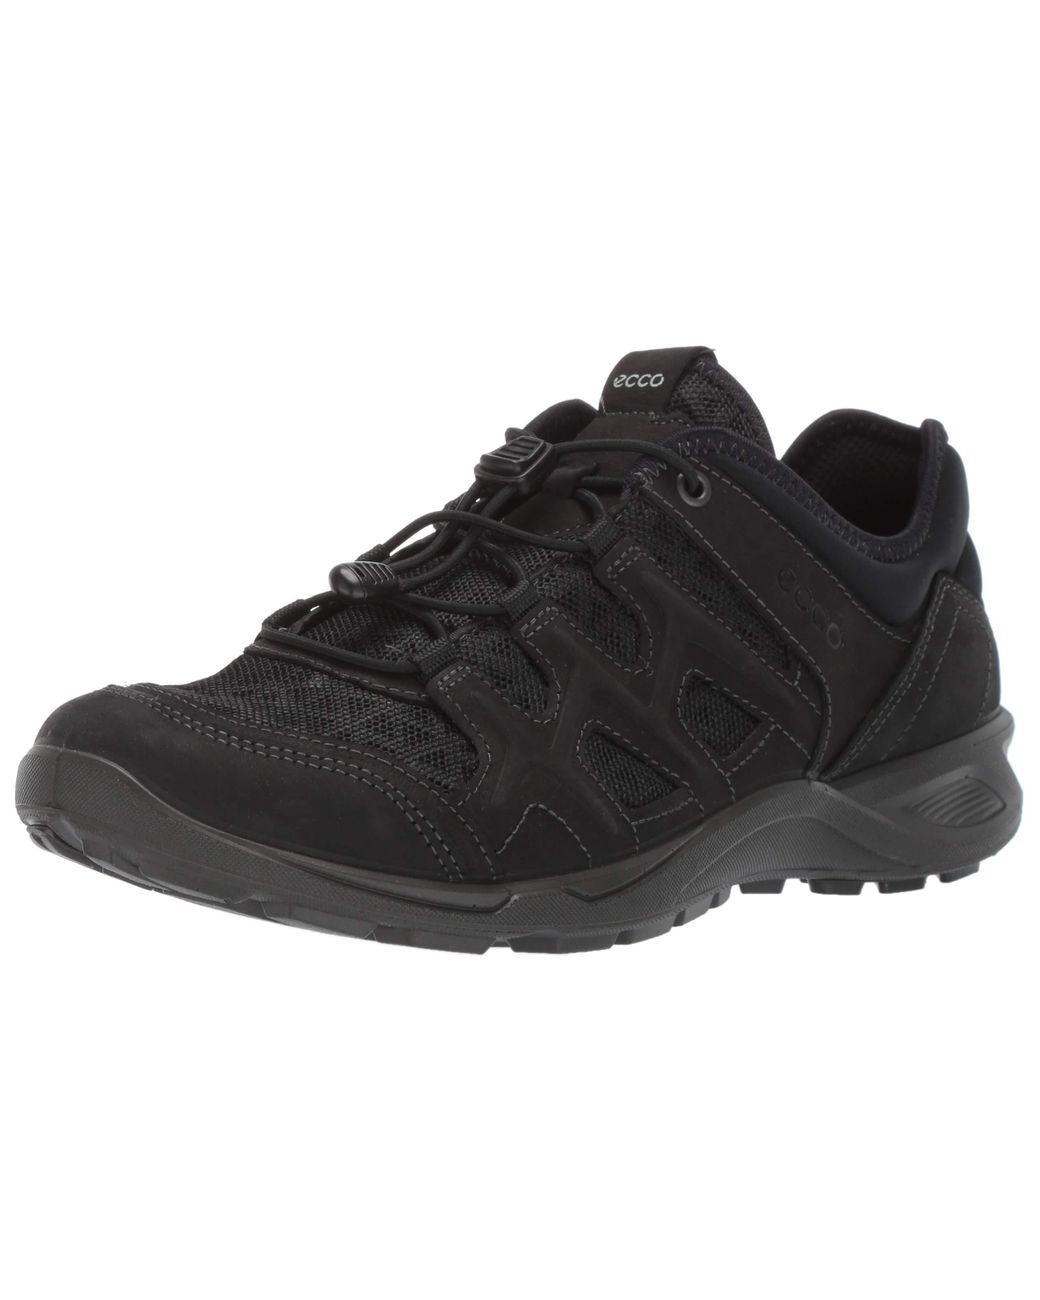 Ecco Terracruise Lt Low Rise Hiking Shoes, in Black/Black (Black) for Men -  Lyst